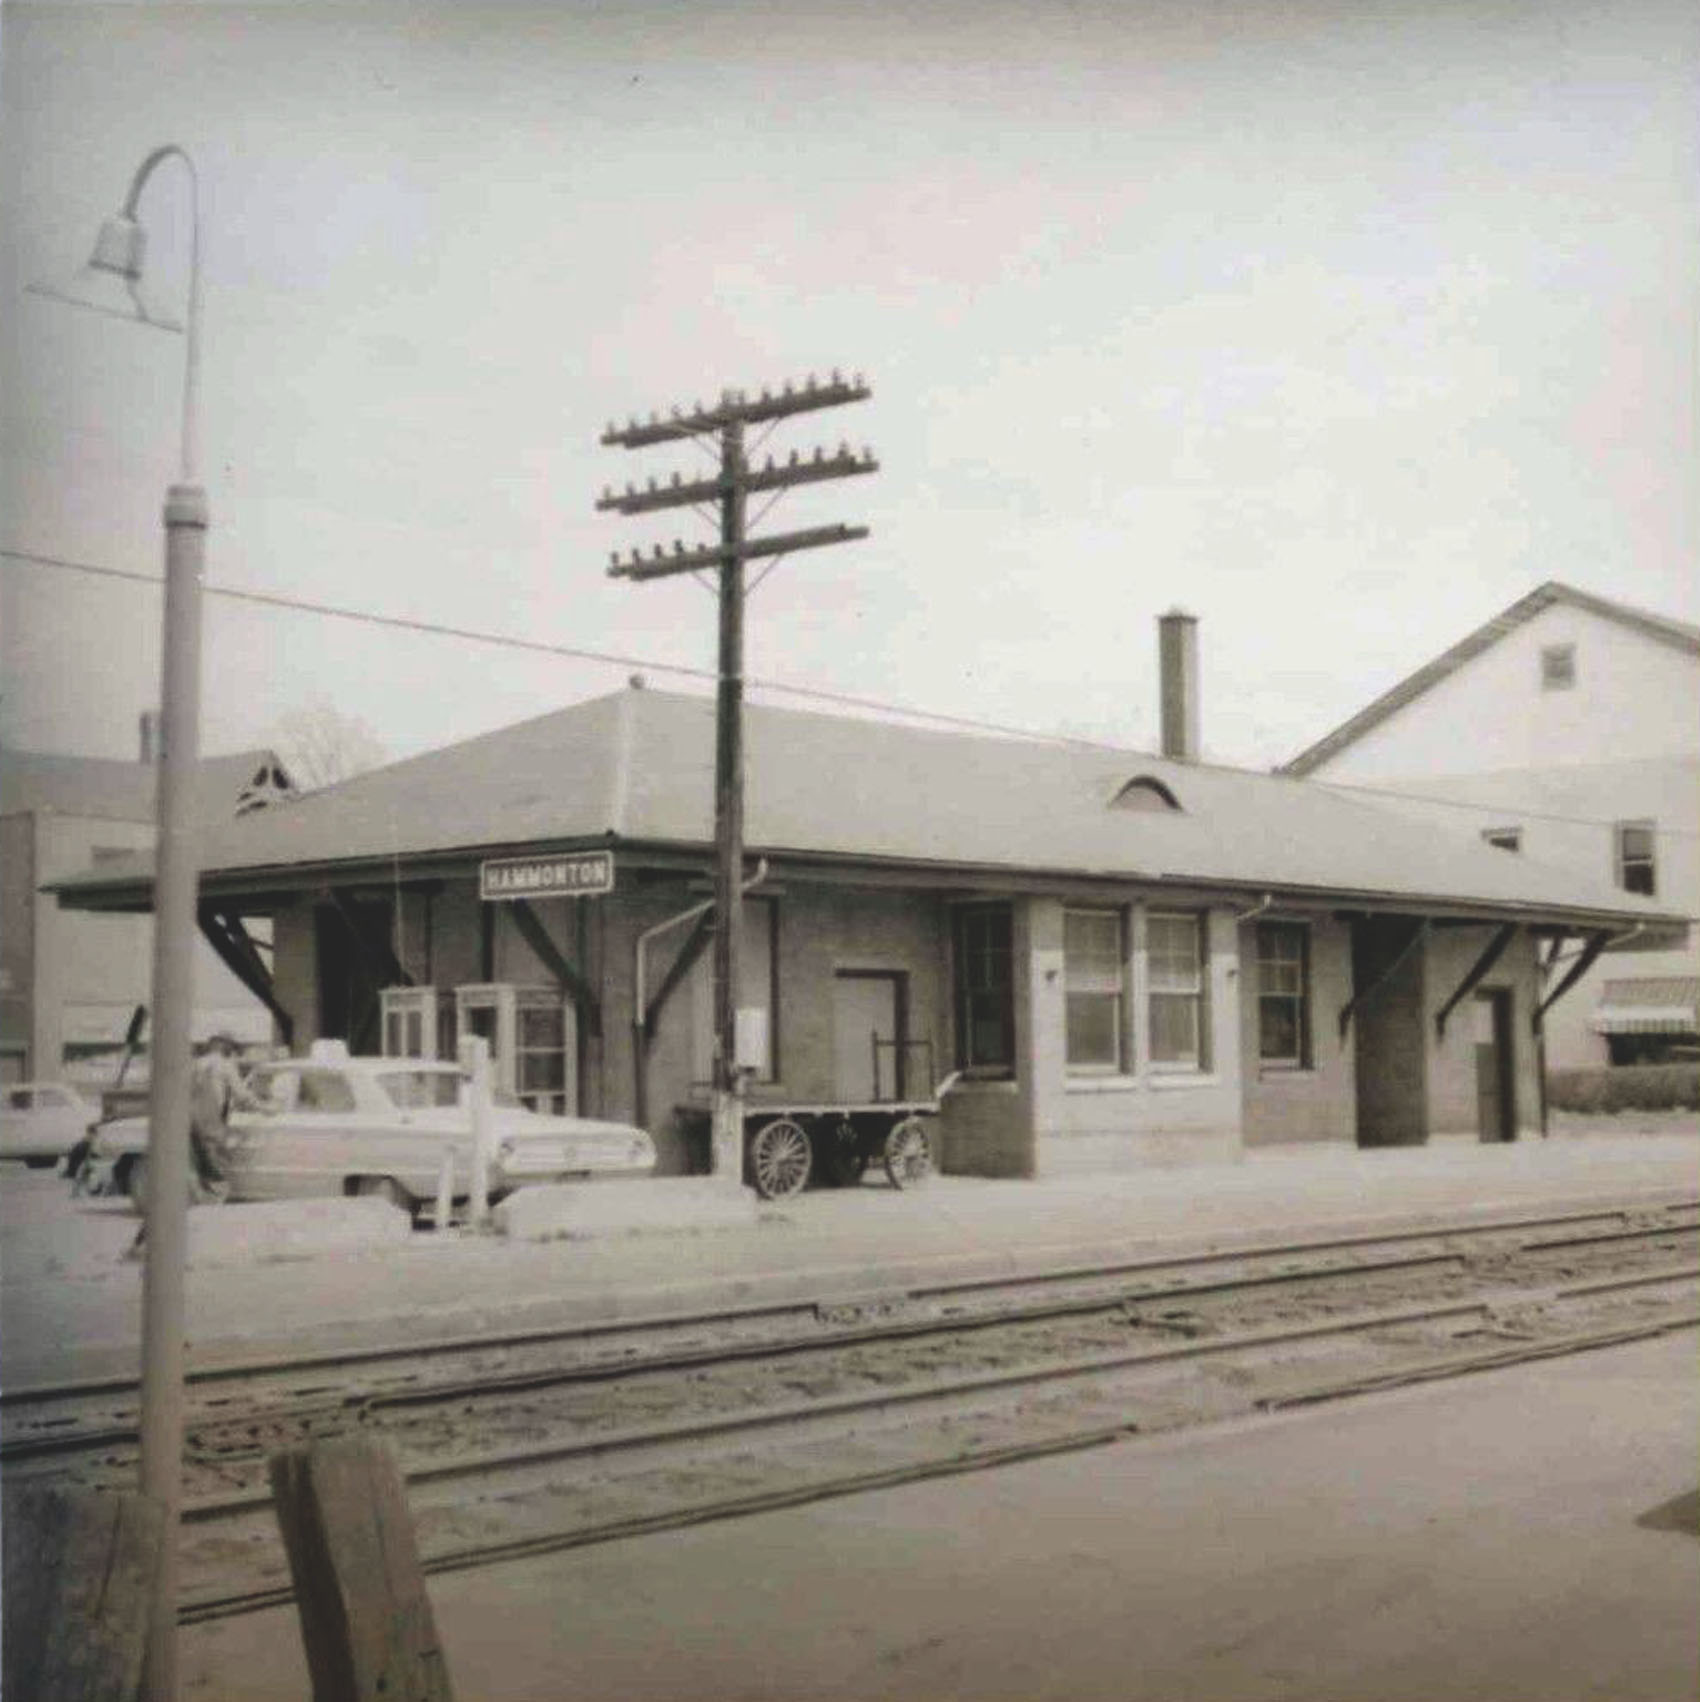 Hammonton - Said to be the PRSL station - 1965